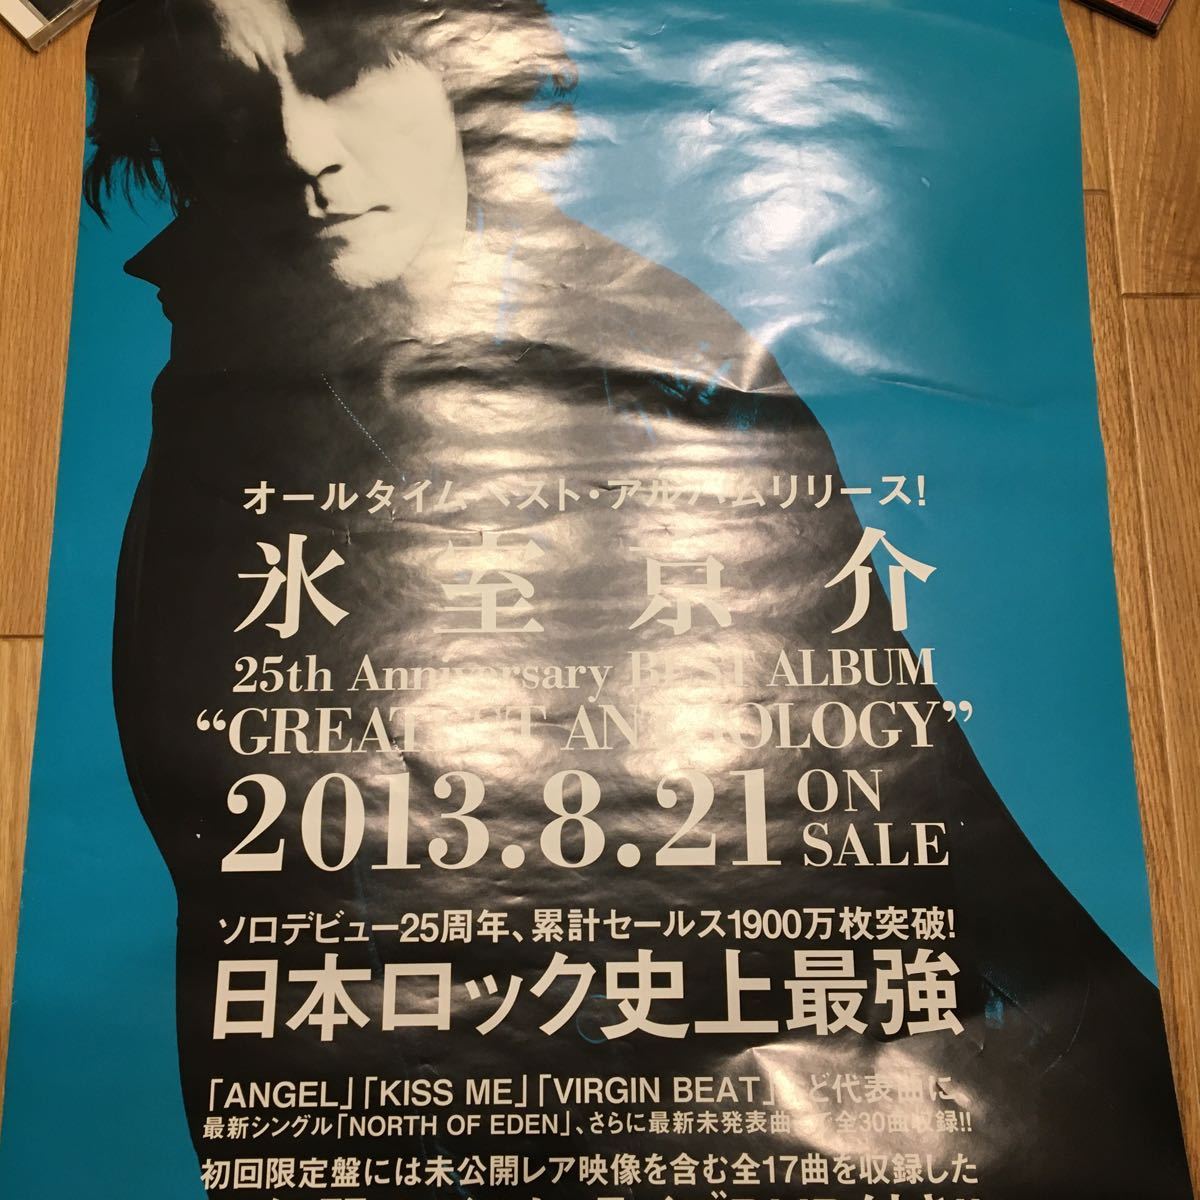  не продается Himuro Kyosuke постер KYOSUKE HIMURO 25th Anniversary BEST ALBUM GREATEST ANTHOLOGY